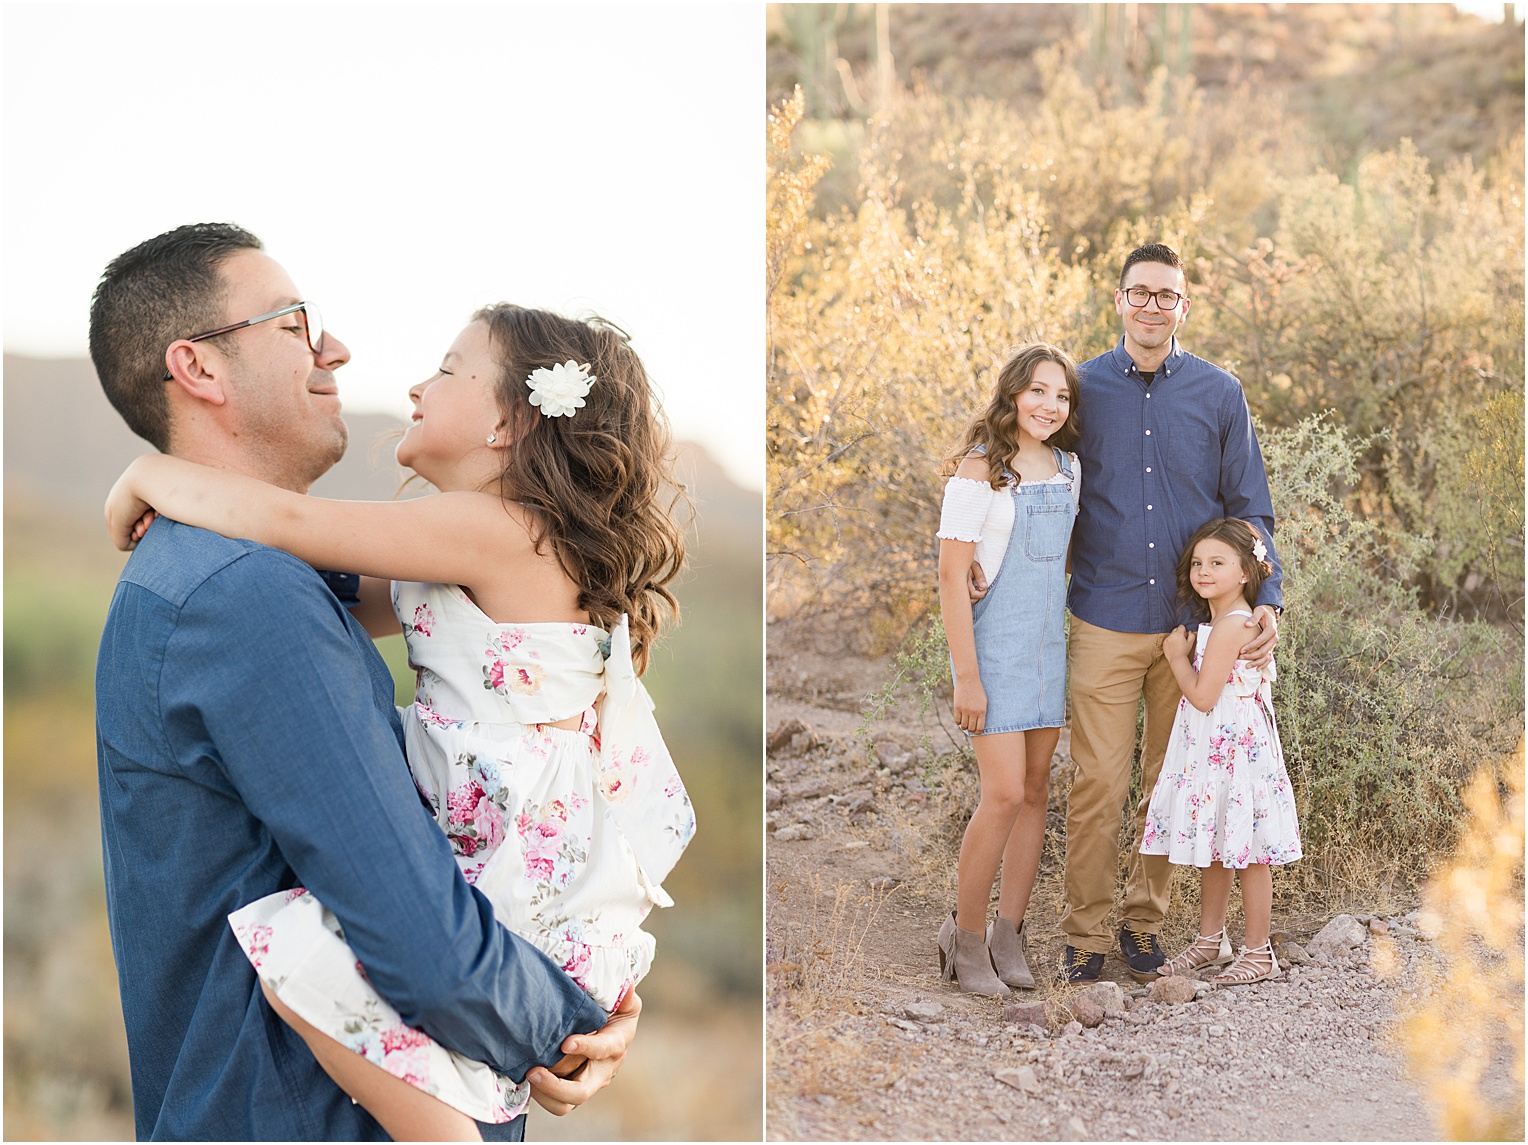 Joyful and Candid Family Photos in Tucson, AZ Emily & Mario